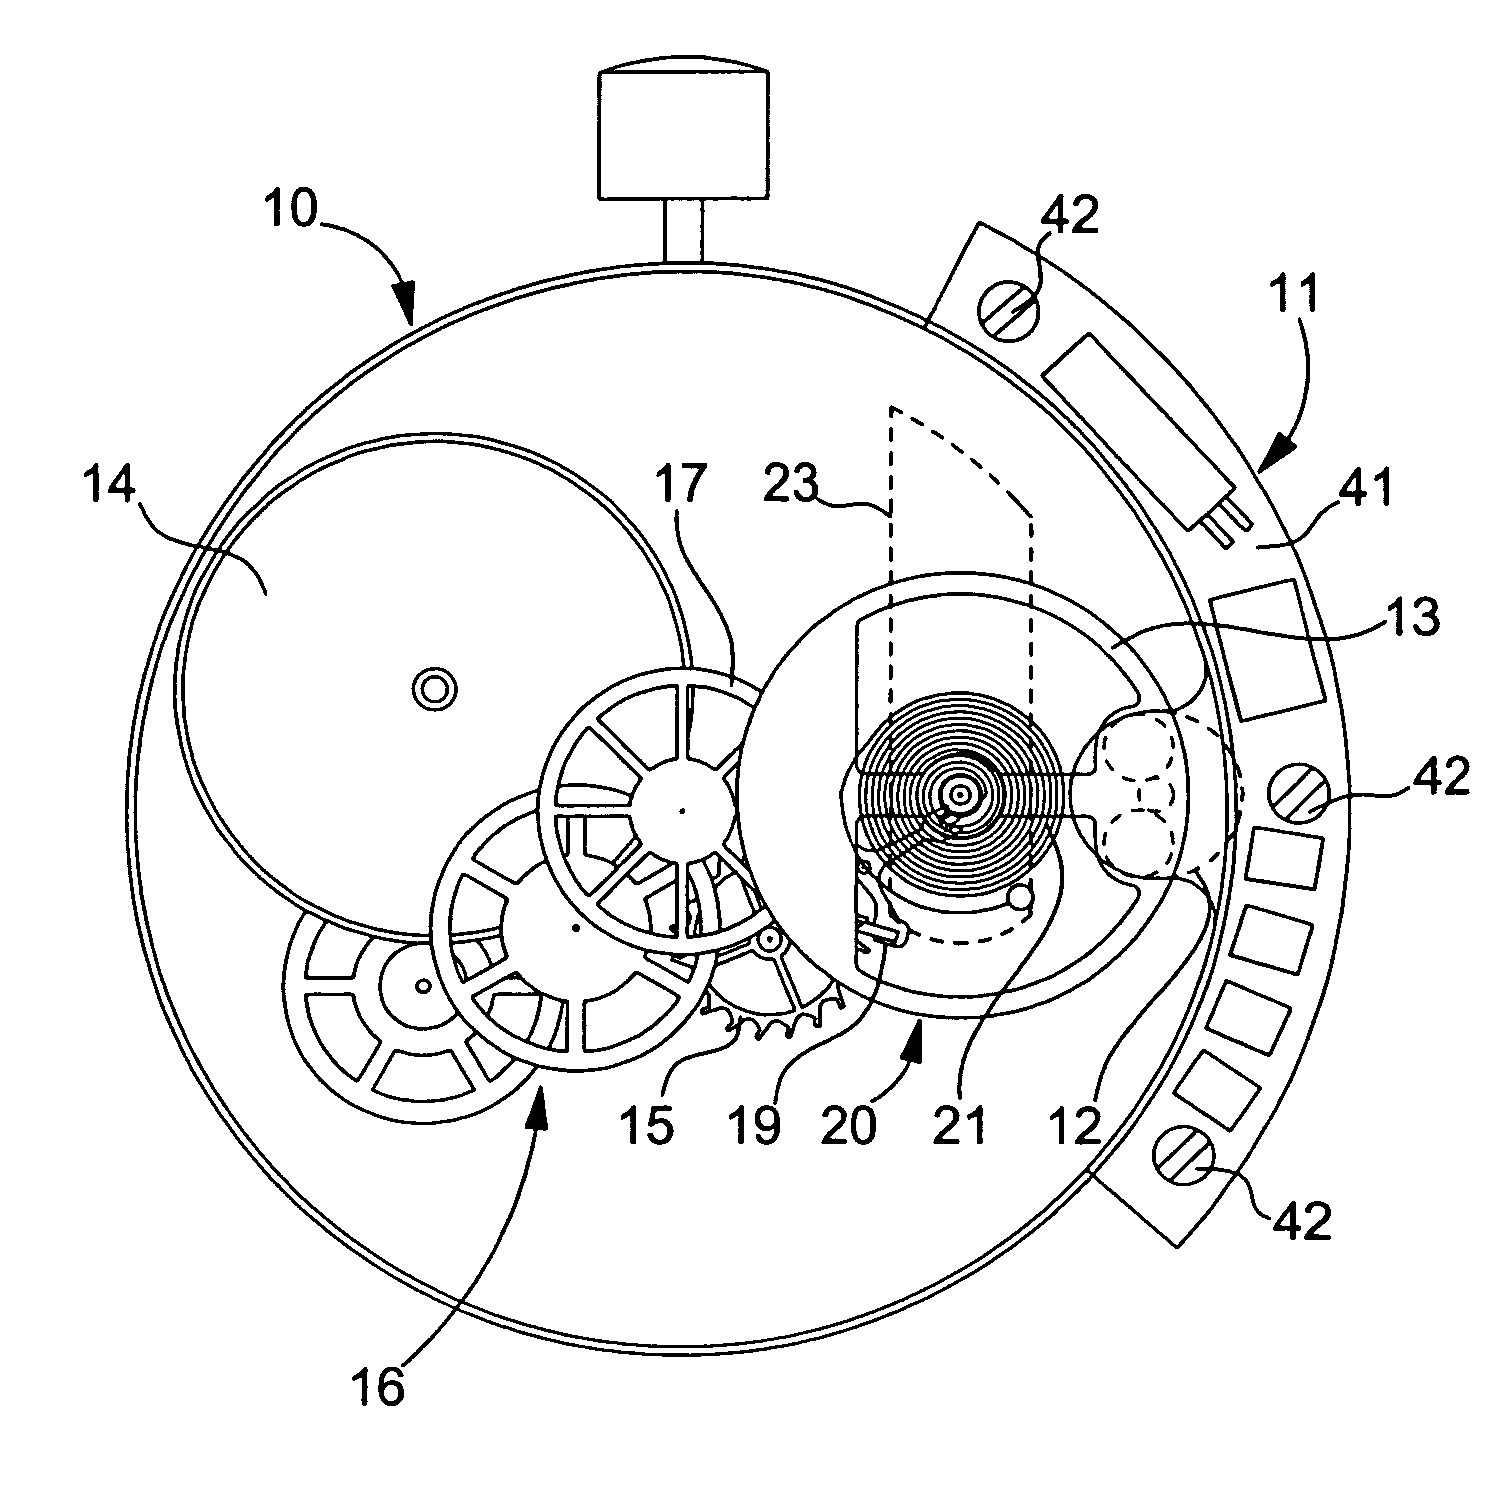 Timepiece having a mechanical movement associated with an electronic regulator